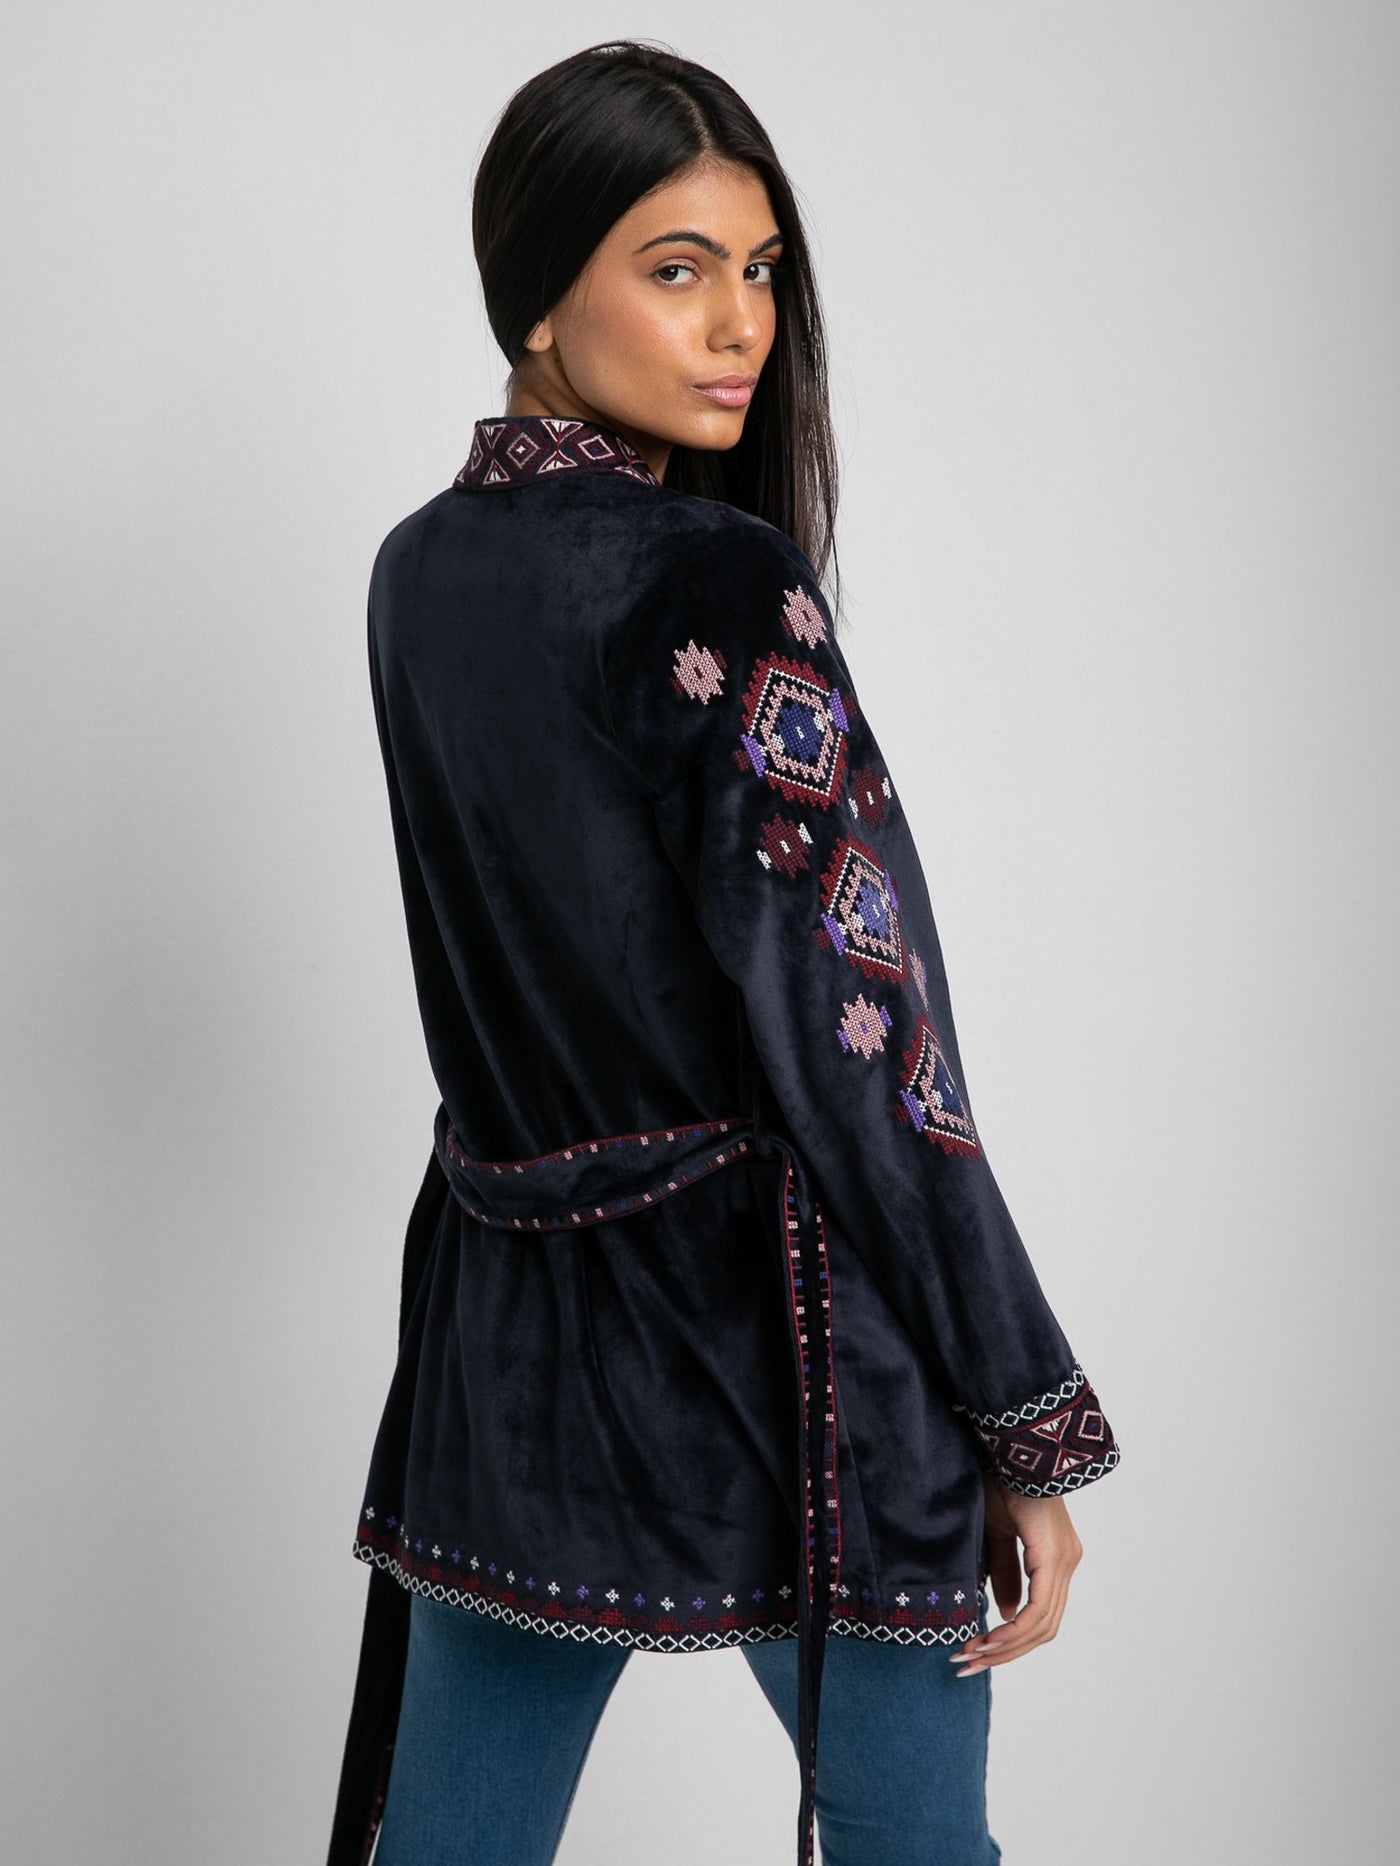 Velvet Jacket - Embroidered Design